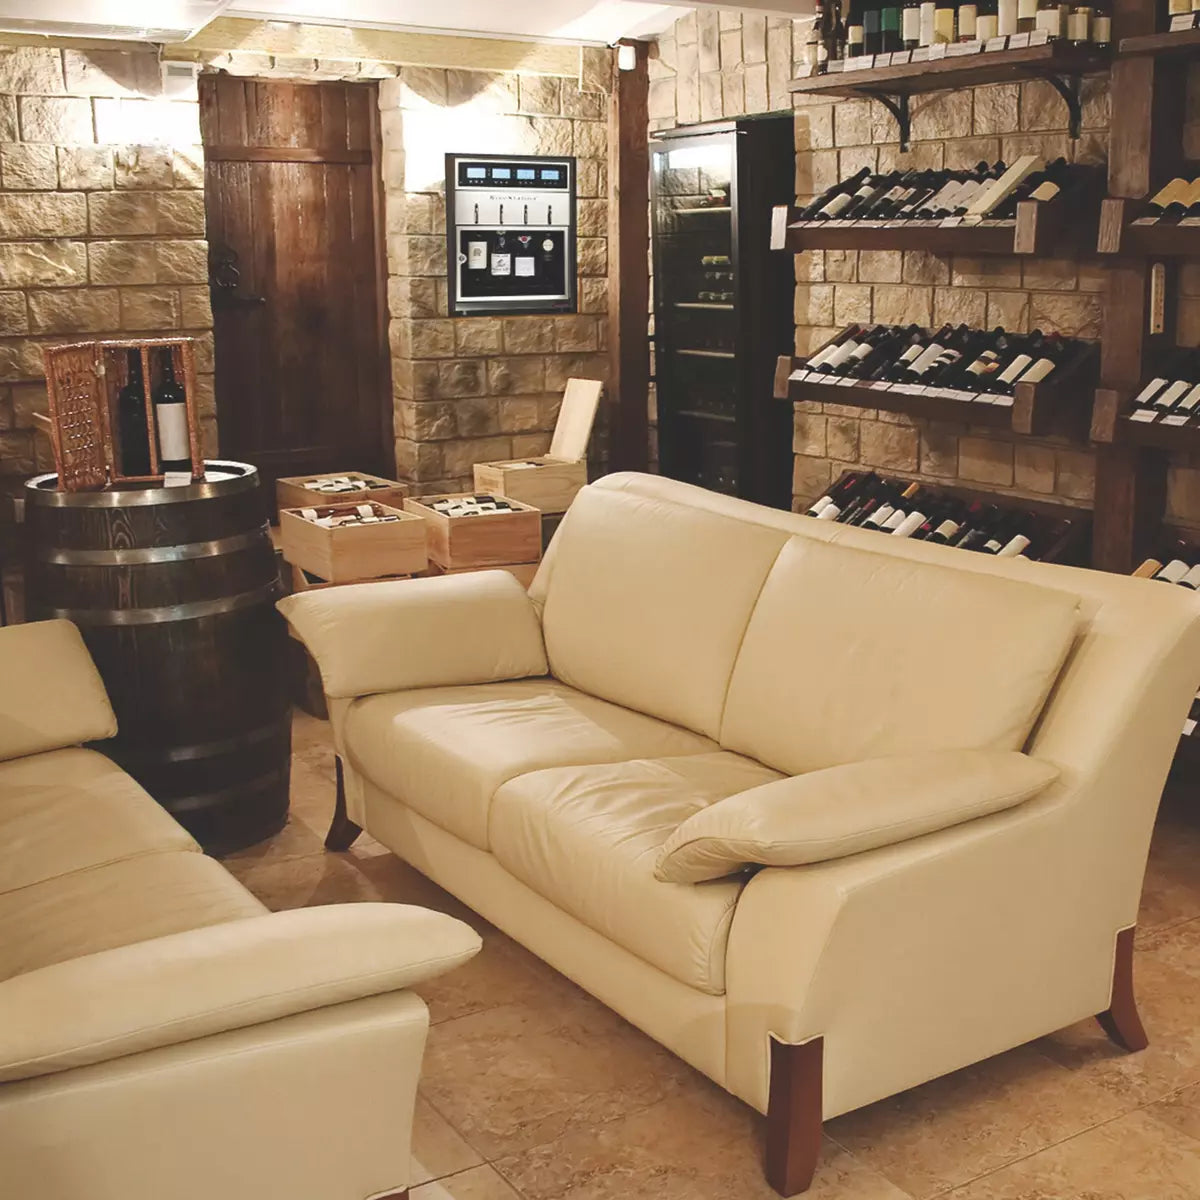 WineStation Pristine Plus (Quartet) Wine Preservation System Deluxe-Napa Technology-Wine Whiskey and Smoke